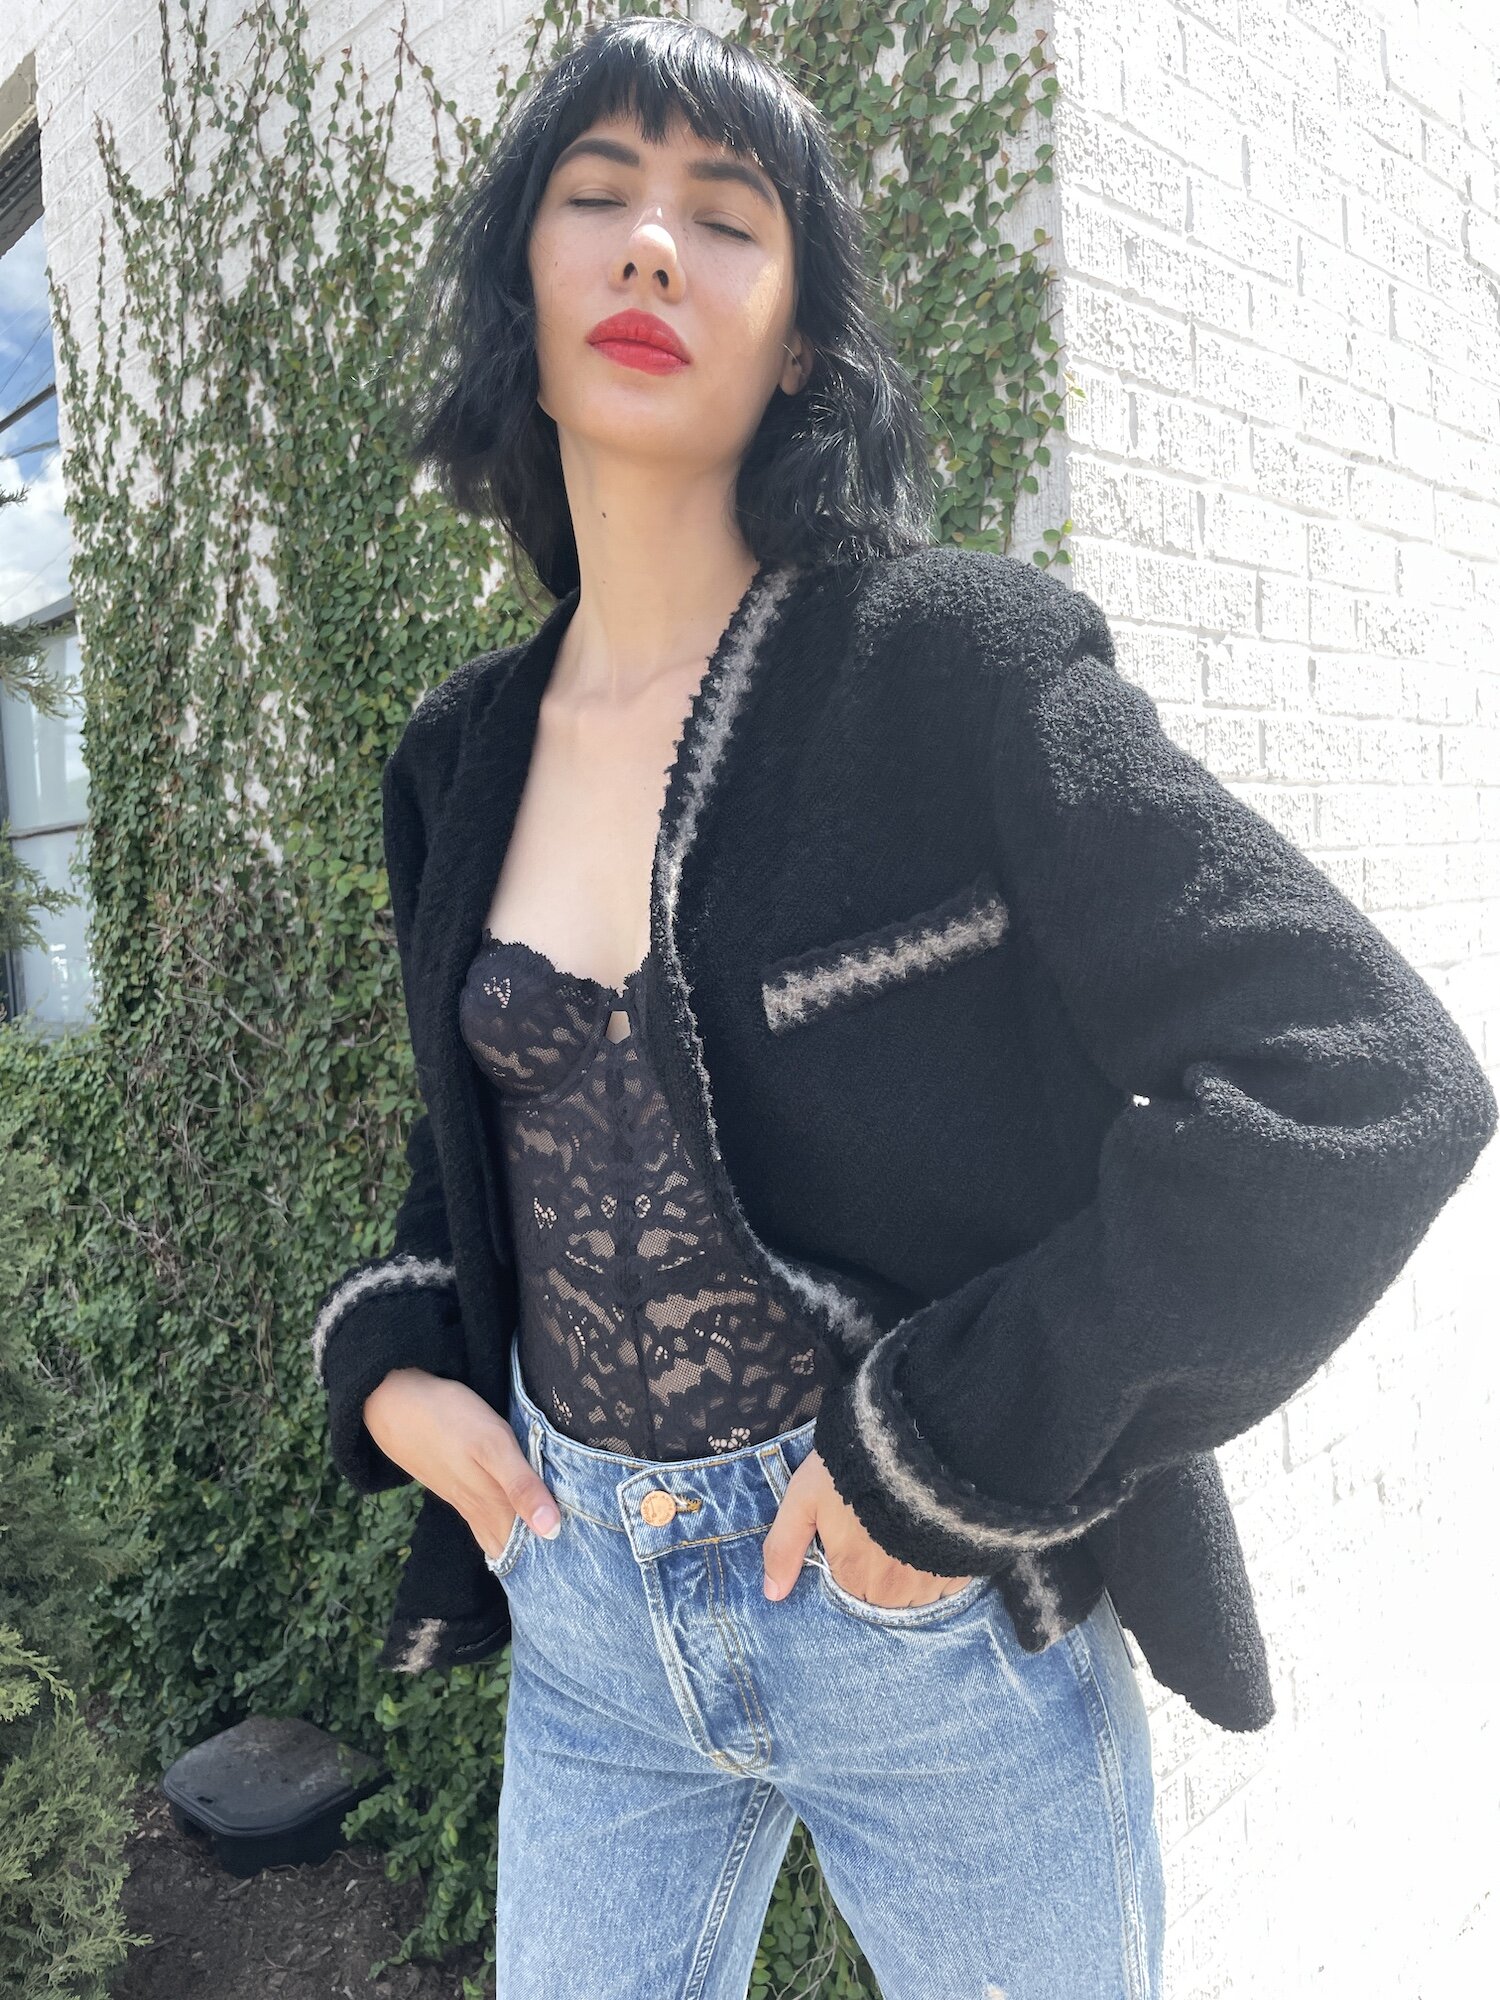 Chanel Black Cropped Fur Jacket